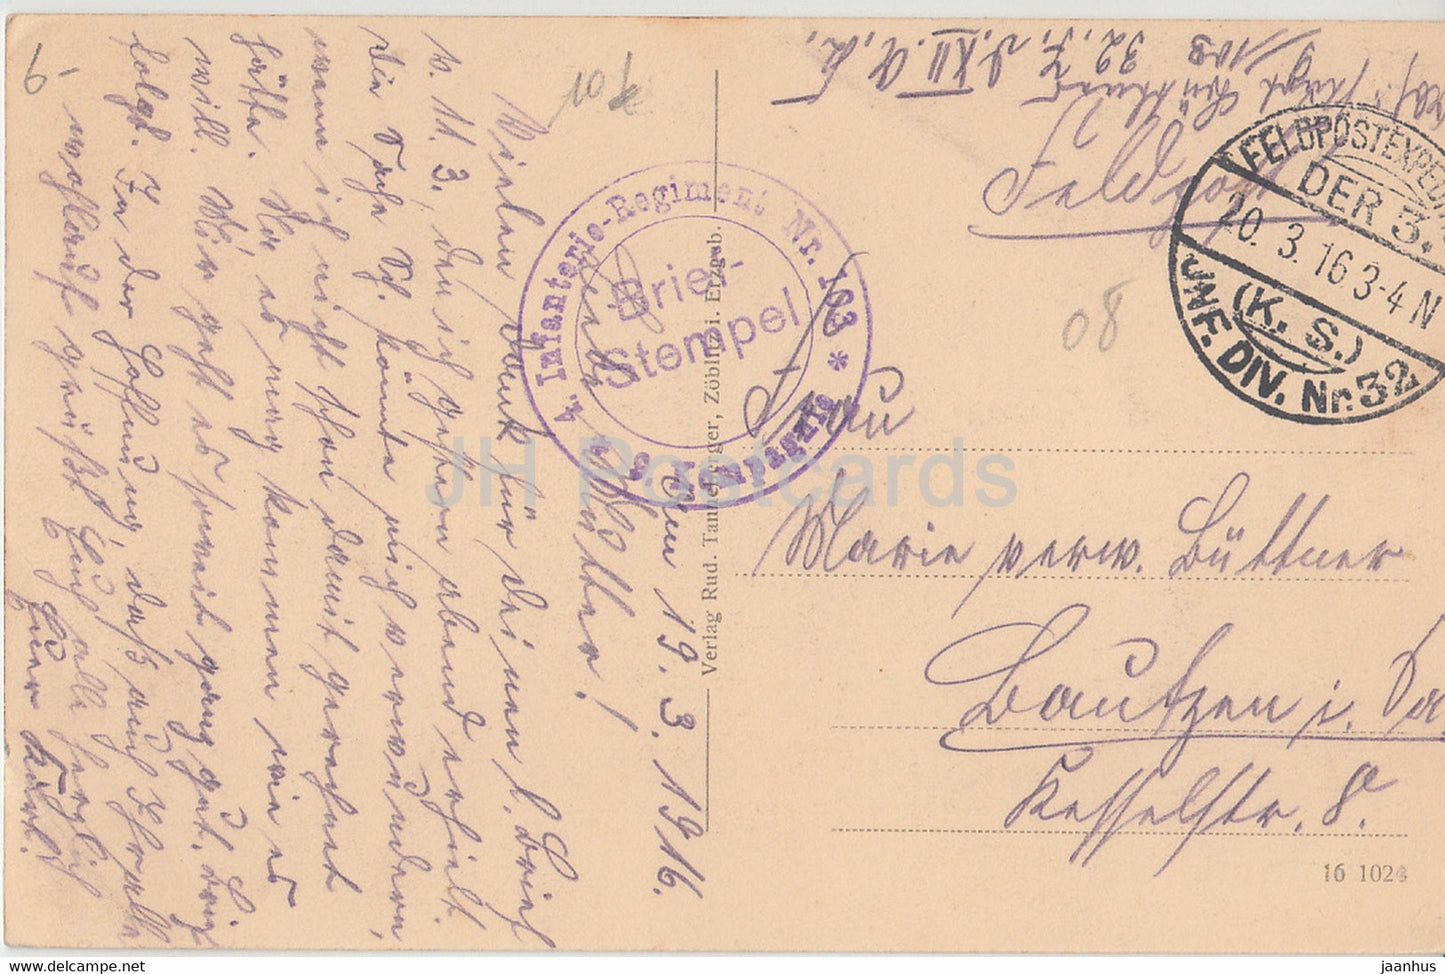 Rethel - Infanterie Regiment Nr 103 - Feldpost - Military - old postcard - 1916 - France - used